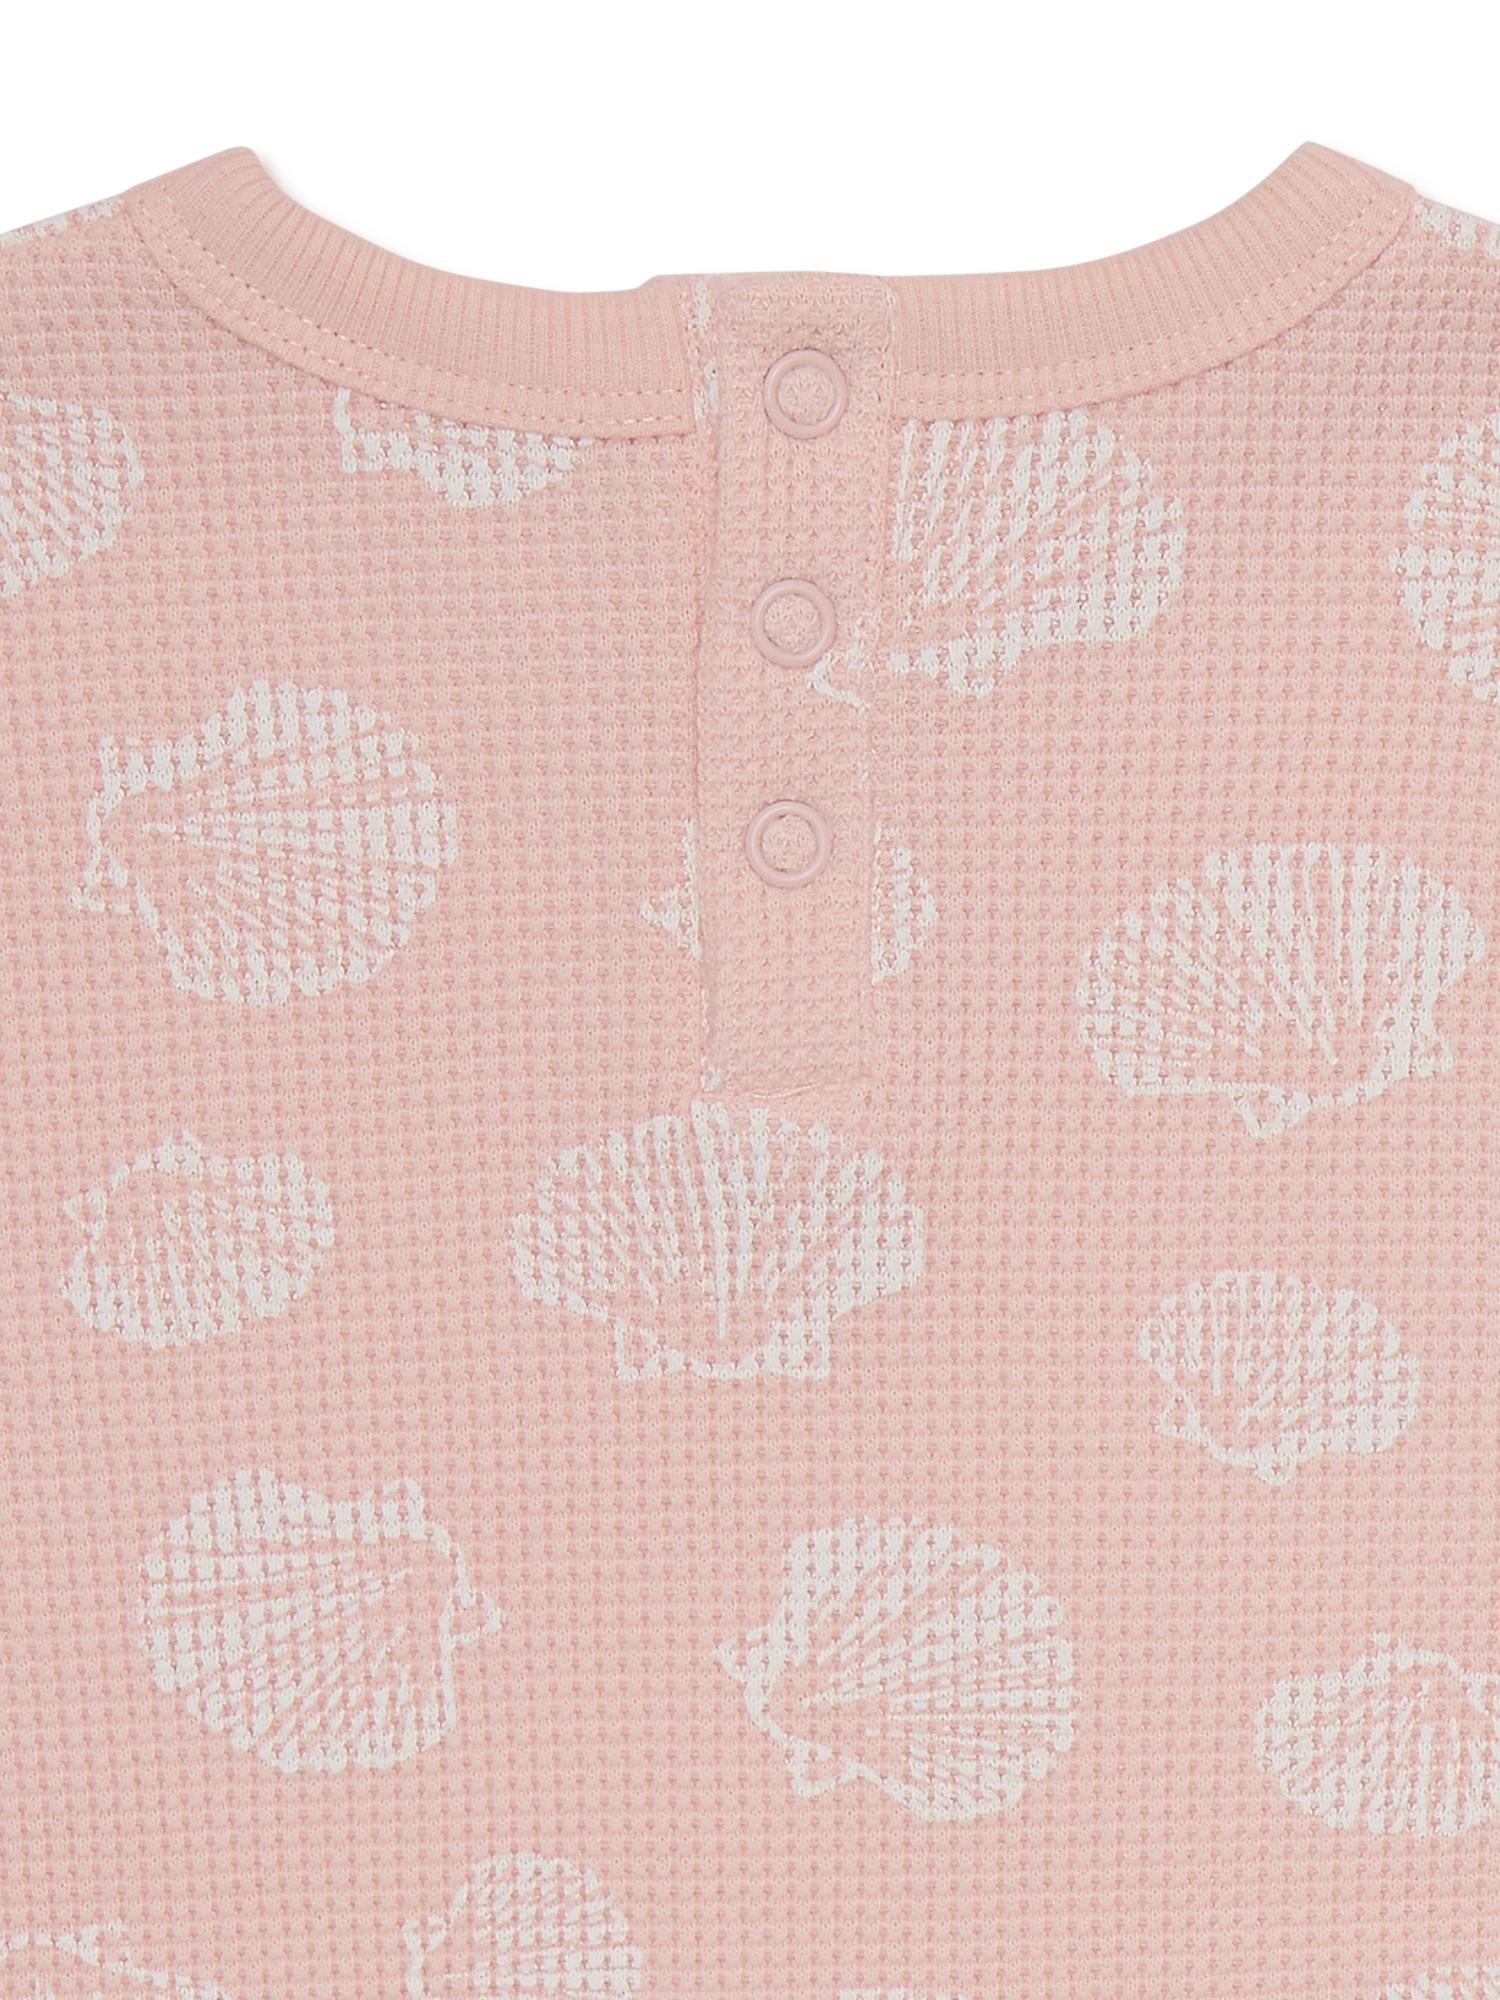 easy-peasy Baby Print Tank Bodysuit, Sizes 0-24 Months - image 2 of 4